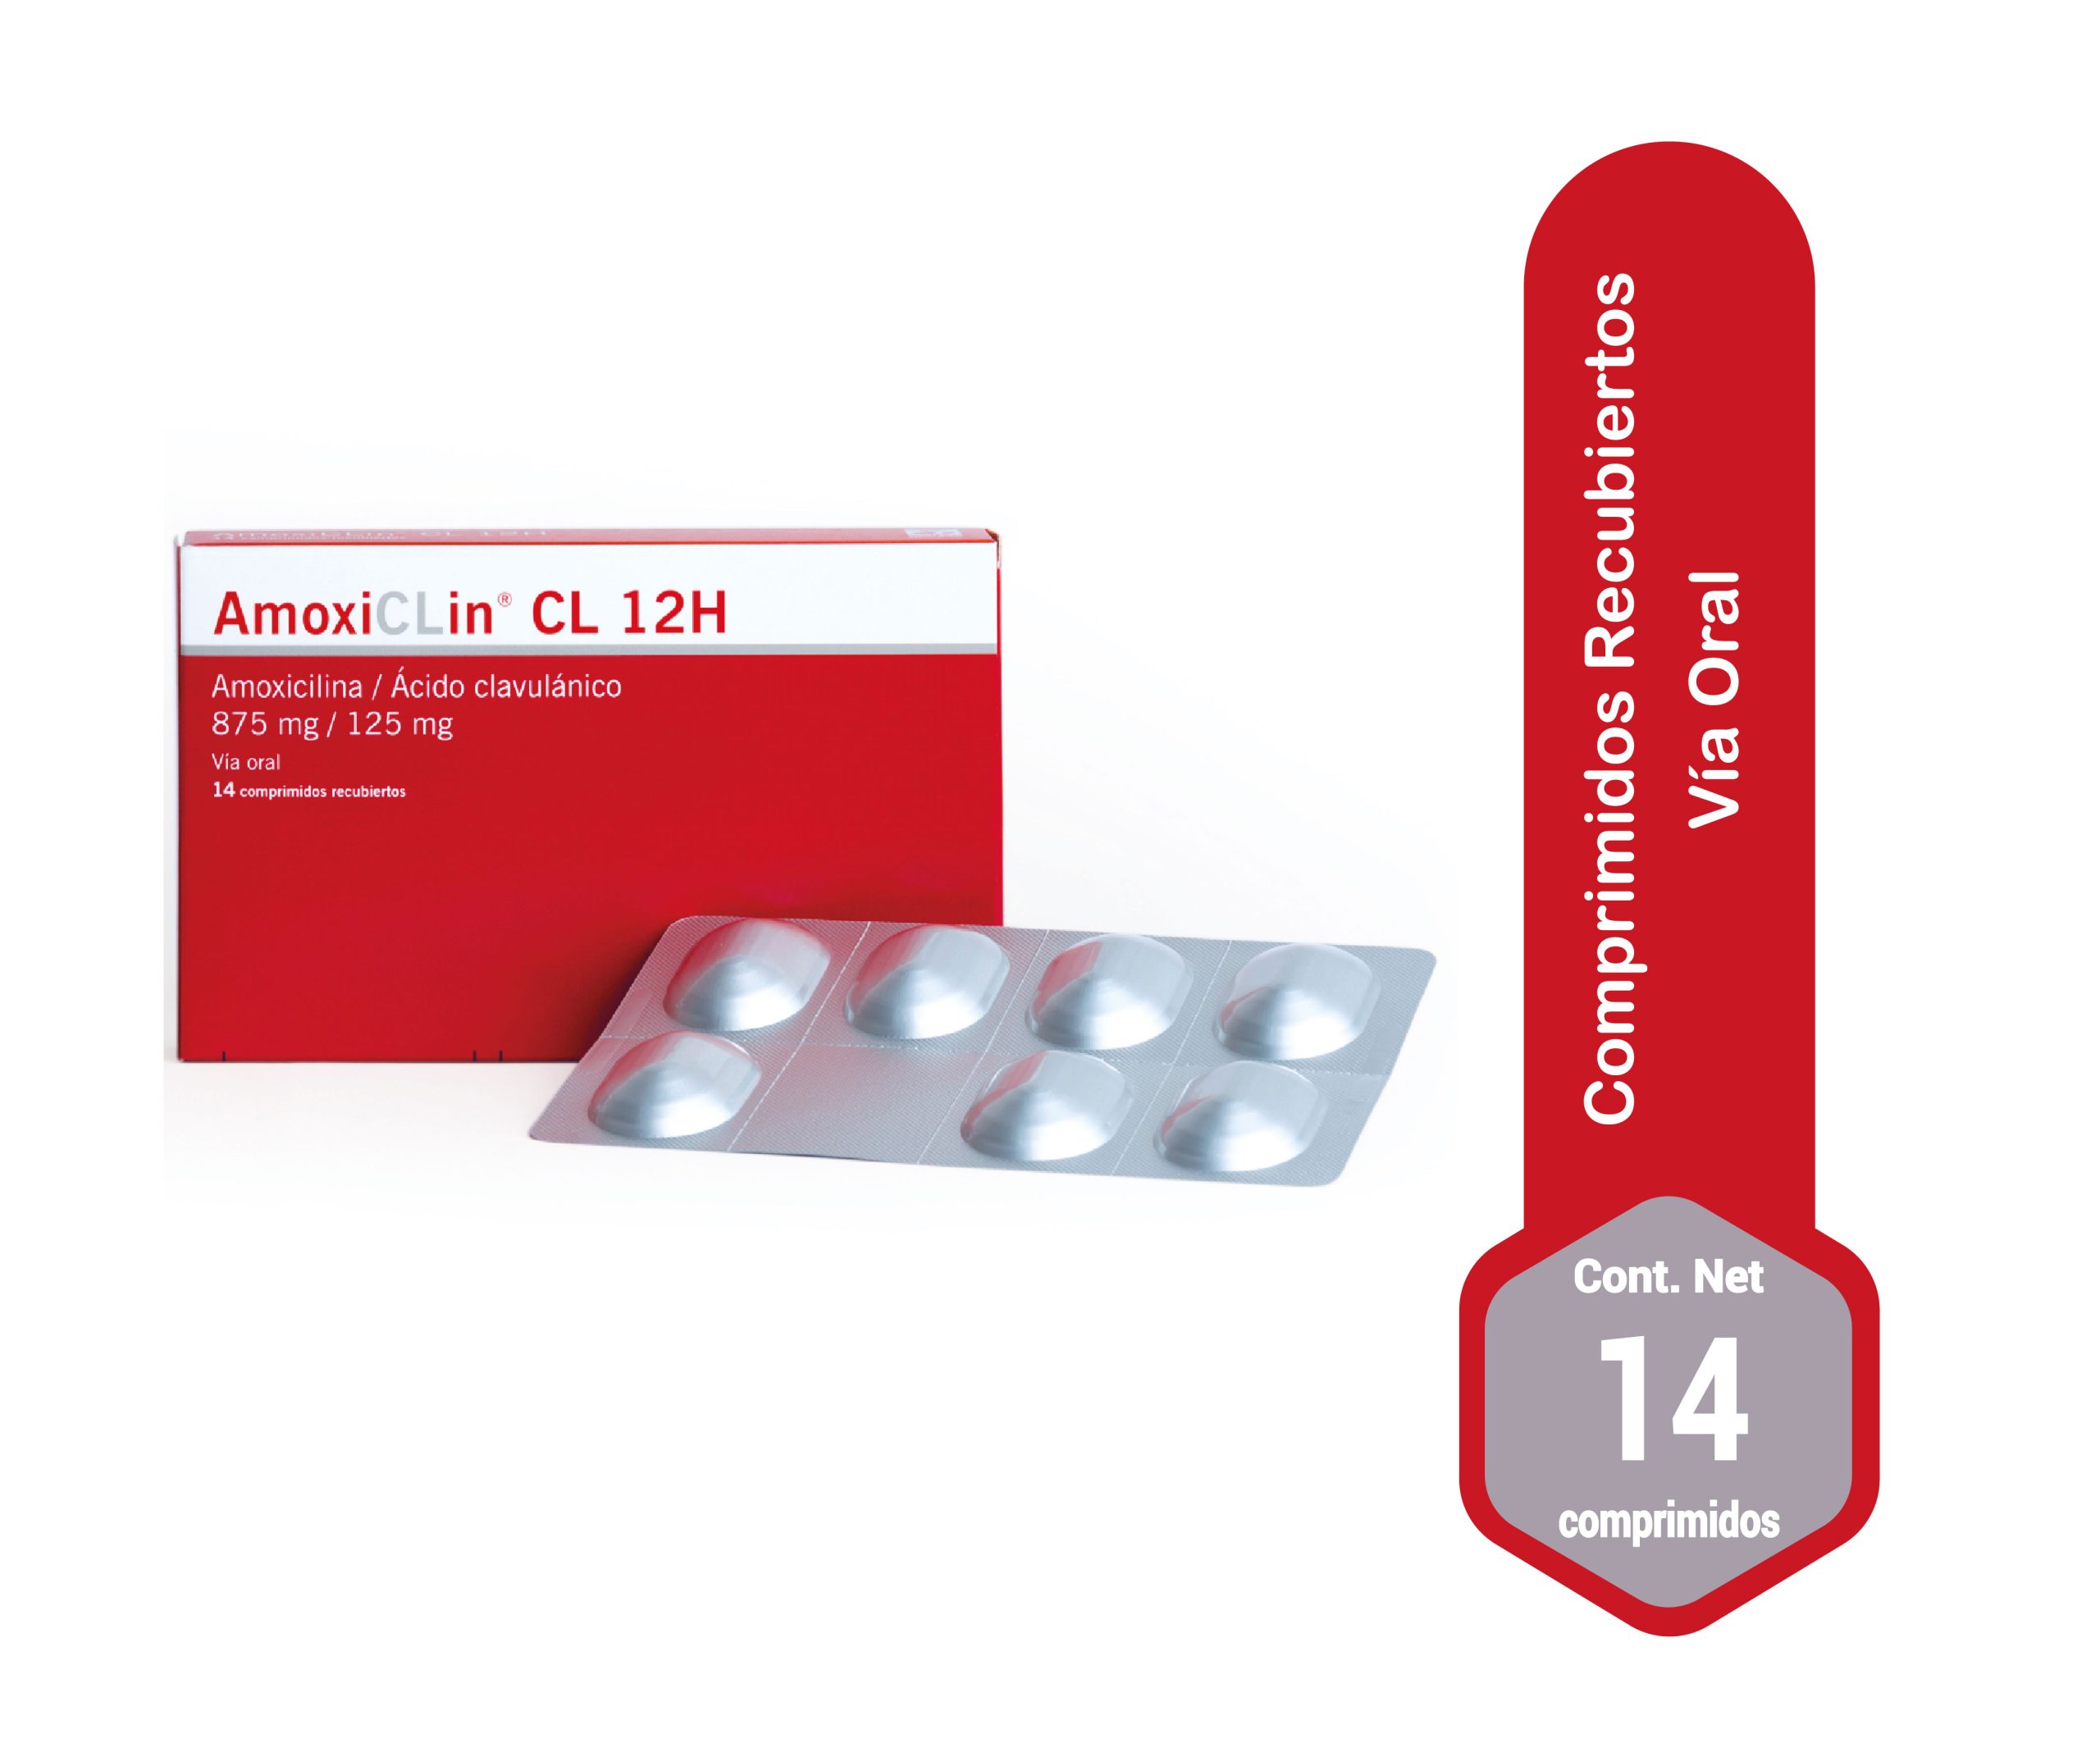 amoxiclin cl 12H 14 comprimidos